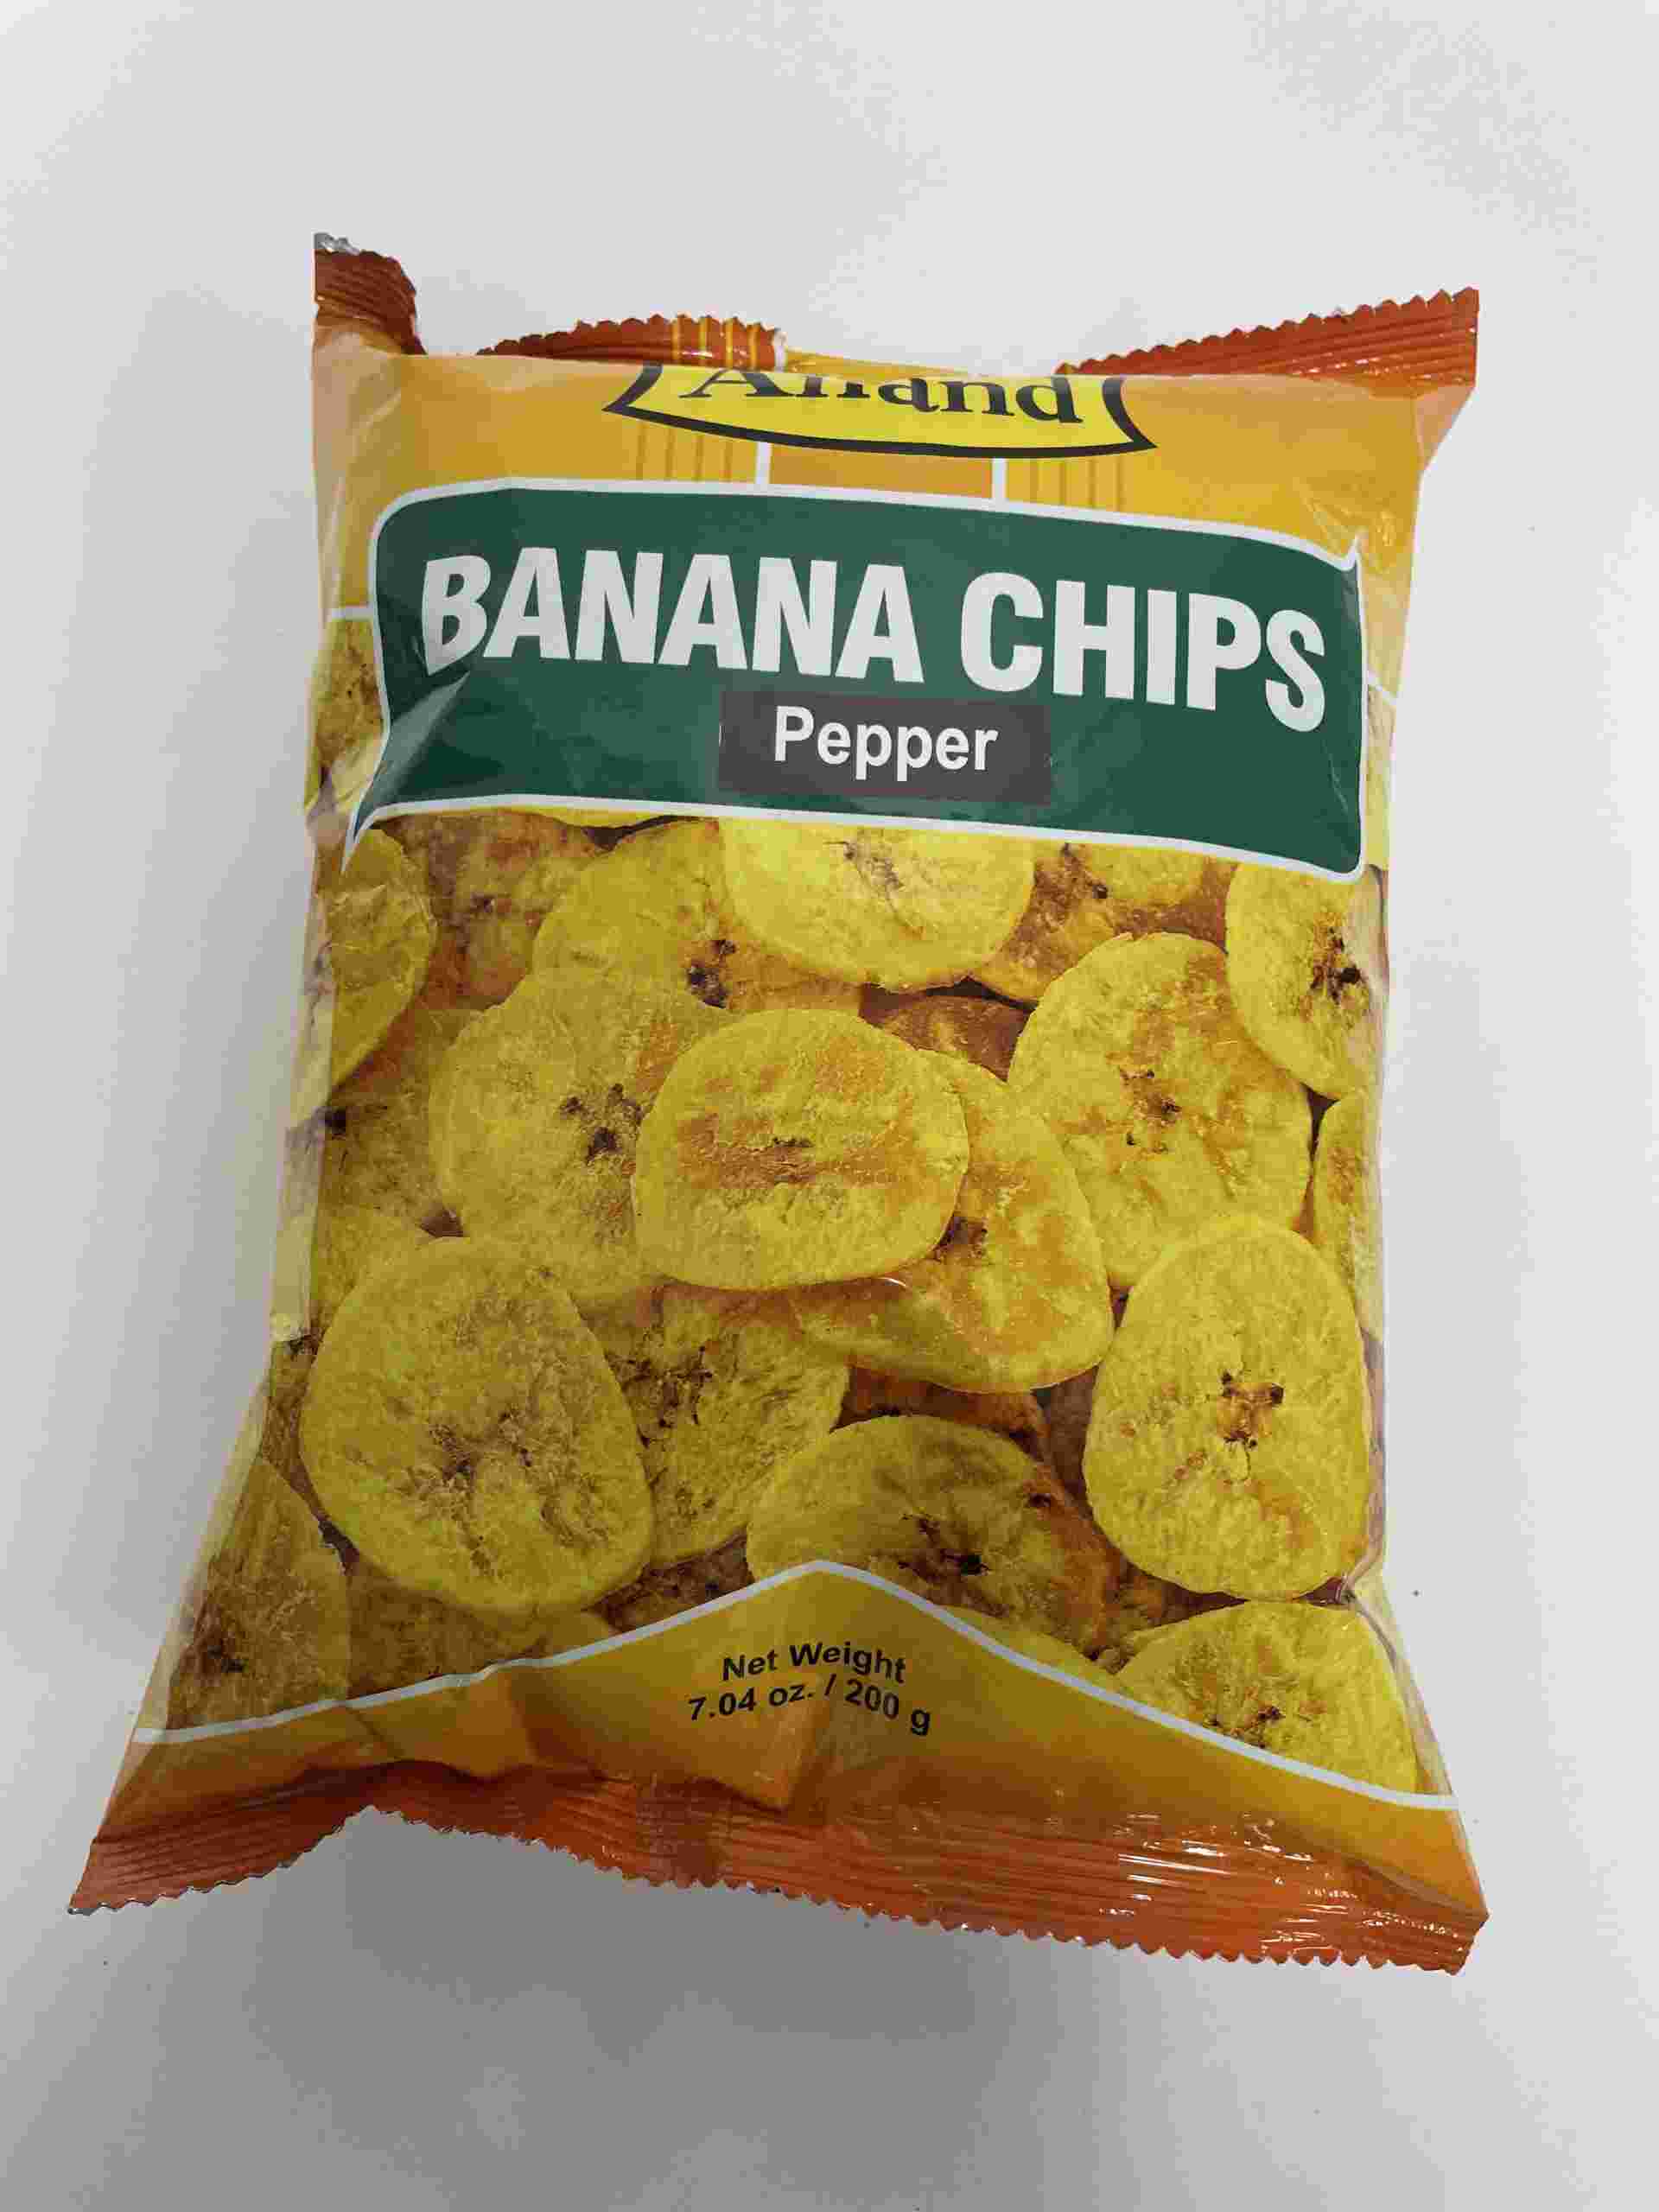 Anand Banana Chips (Pepper)